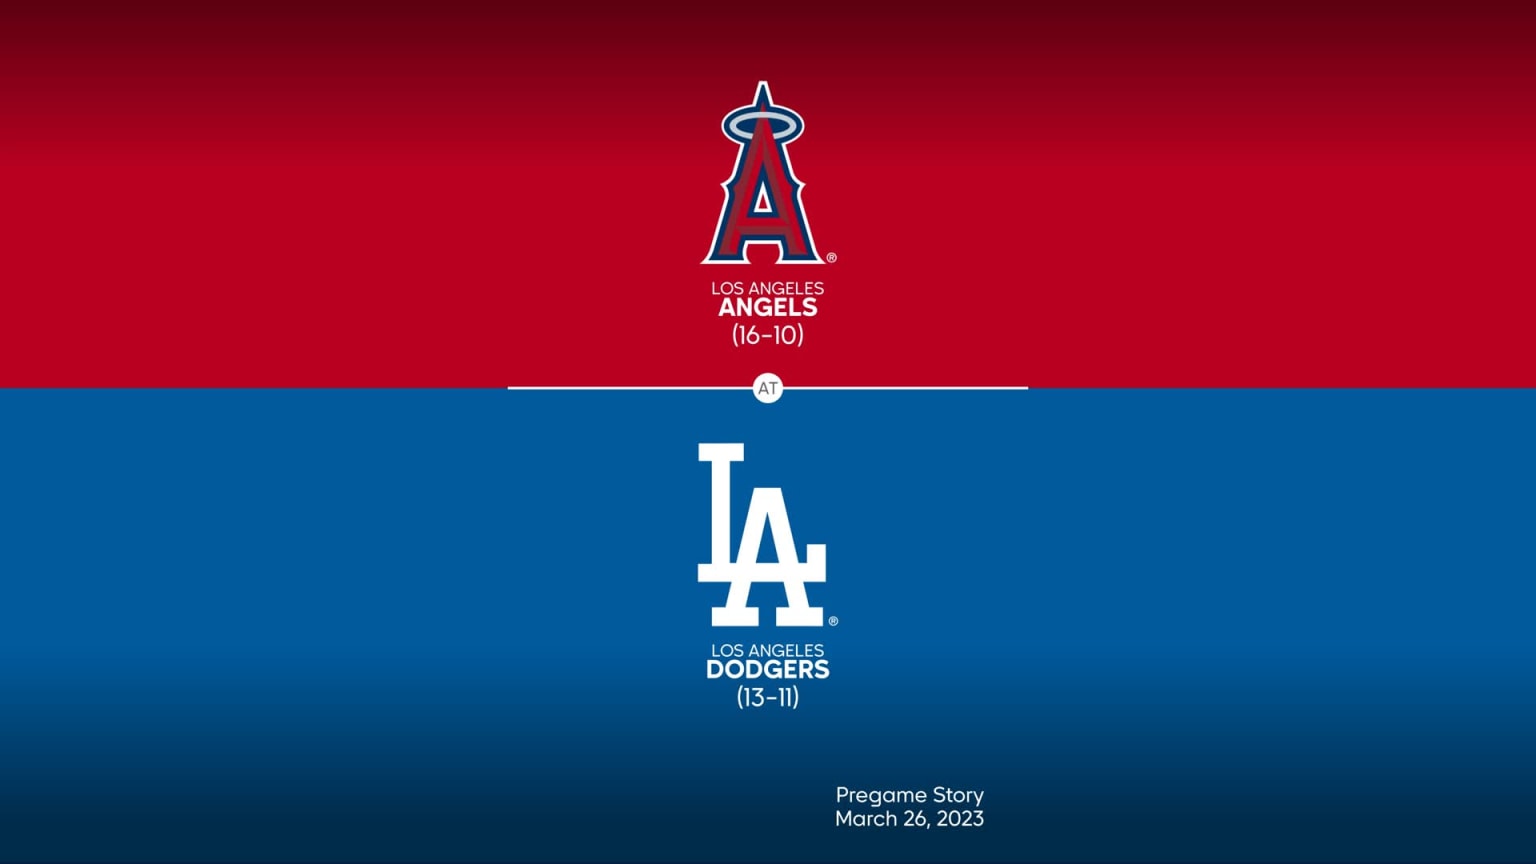 Dodgers angels vs series dodger freeway stadium